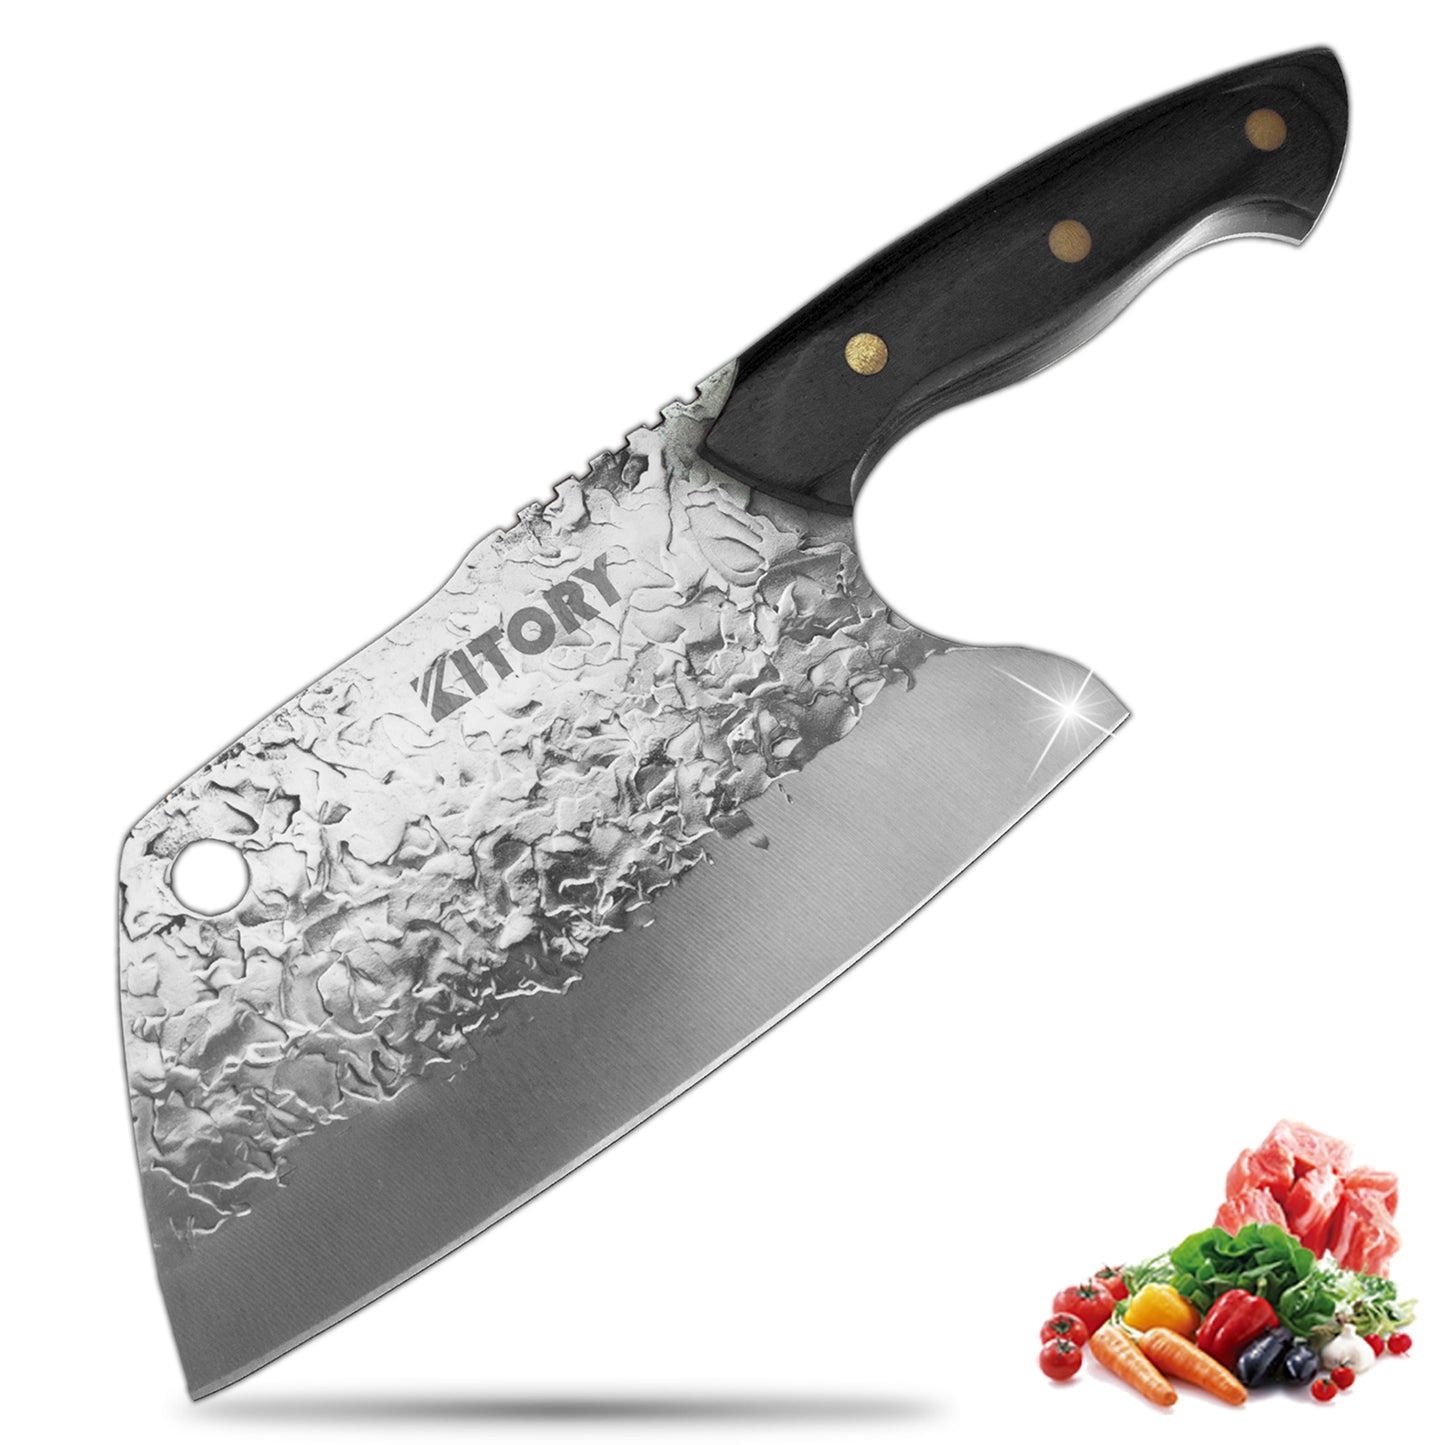 Kitory Chinese Knife Effort-Saving Full-Tang Forged